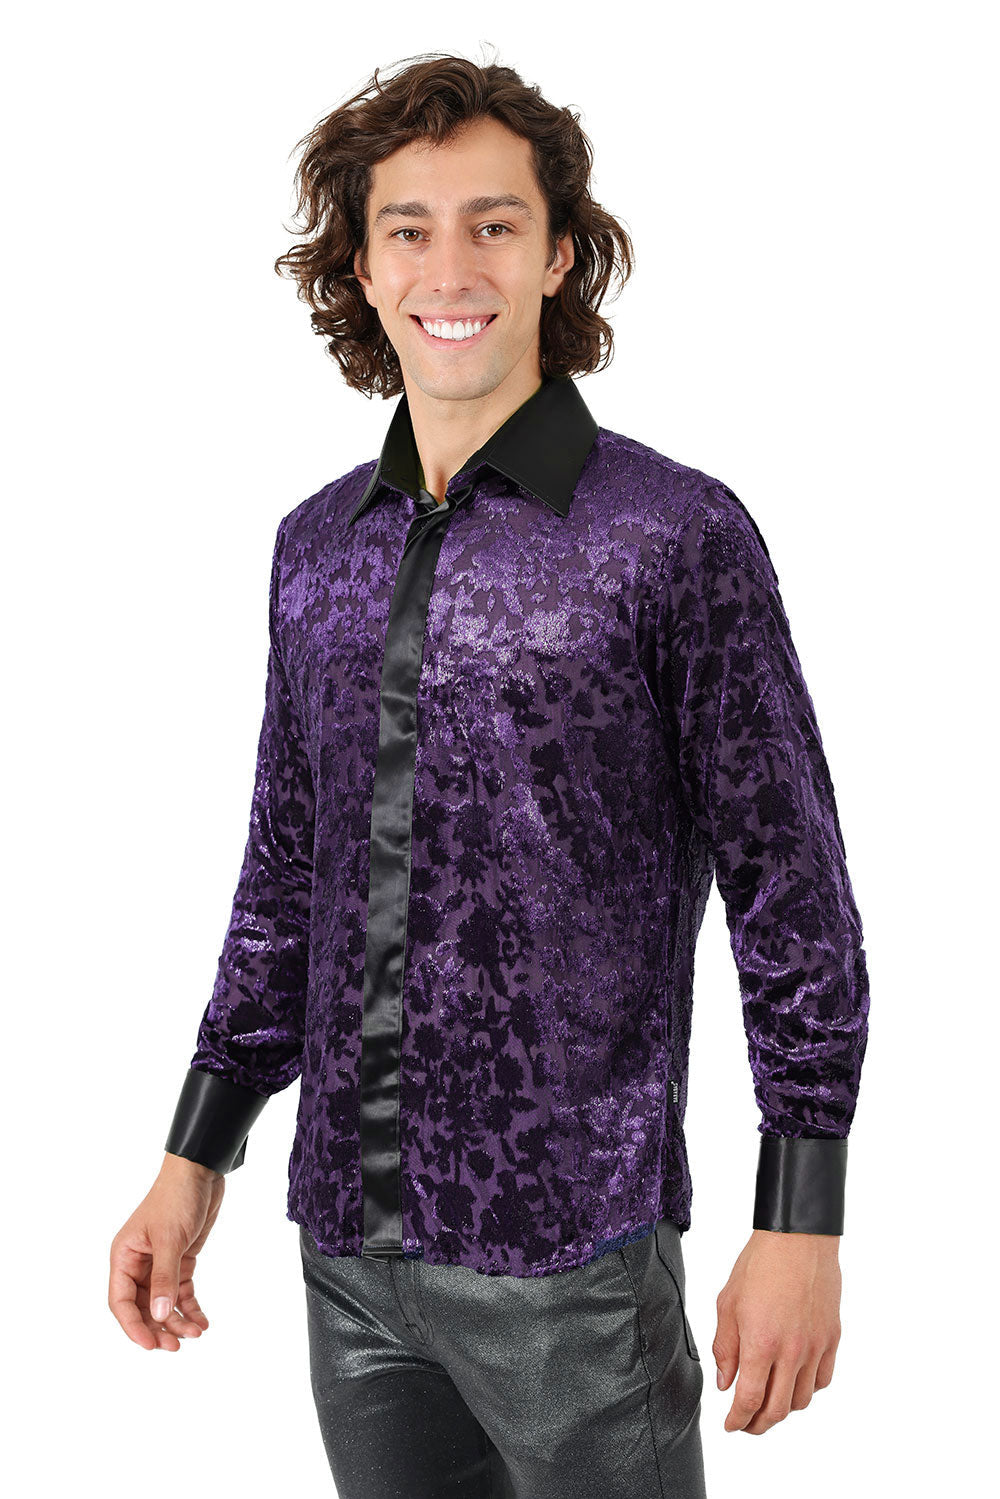 Barabas Men's Luxury French Cuff Long Sleeve Button Down Shirt FCS1003 Purple Black